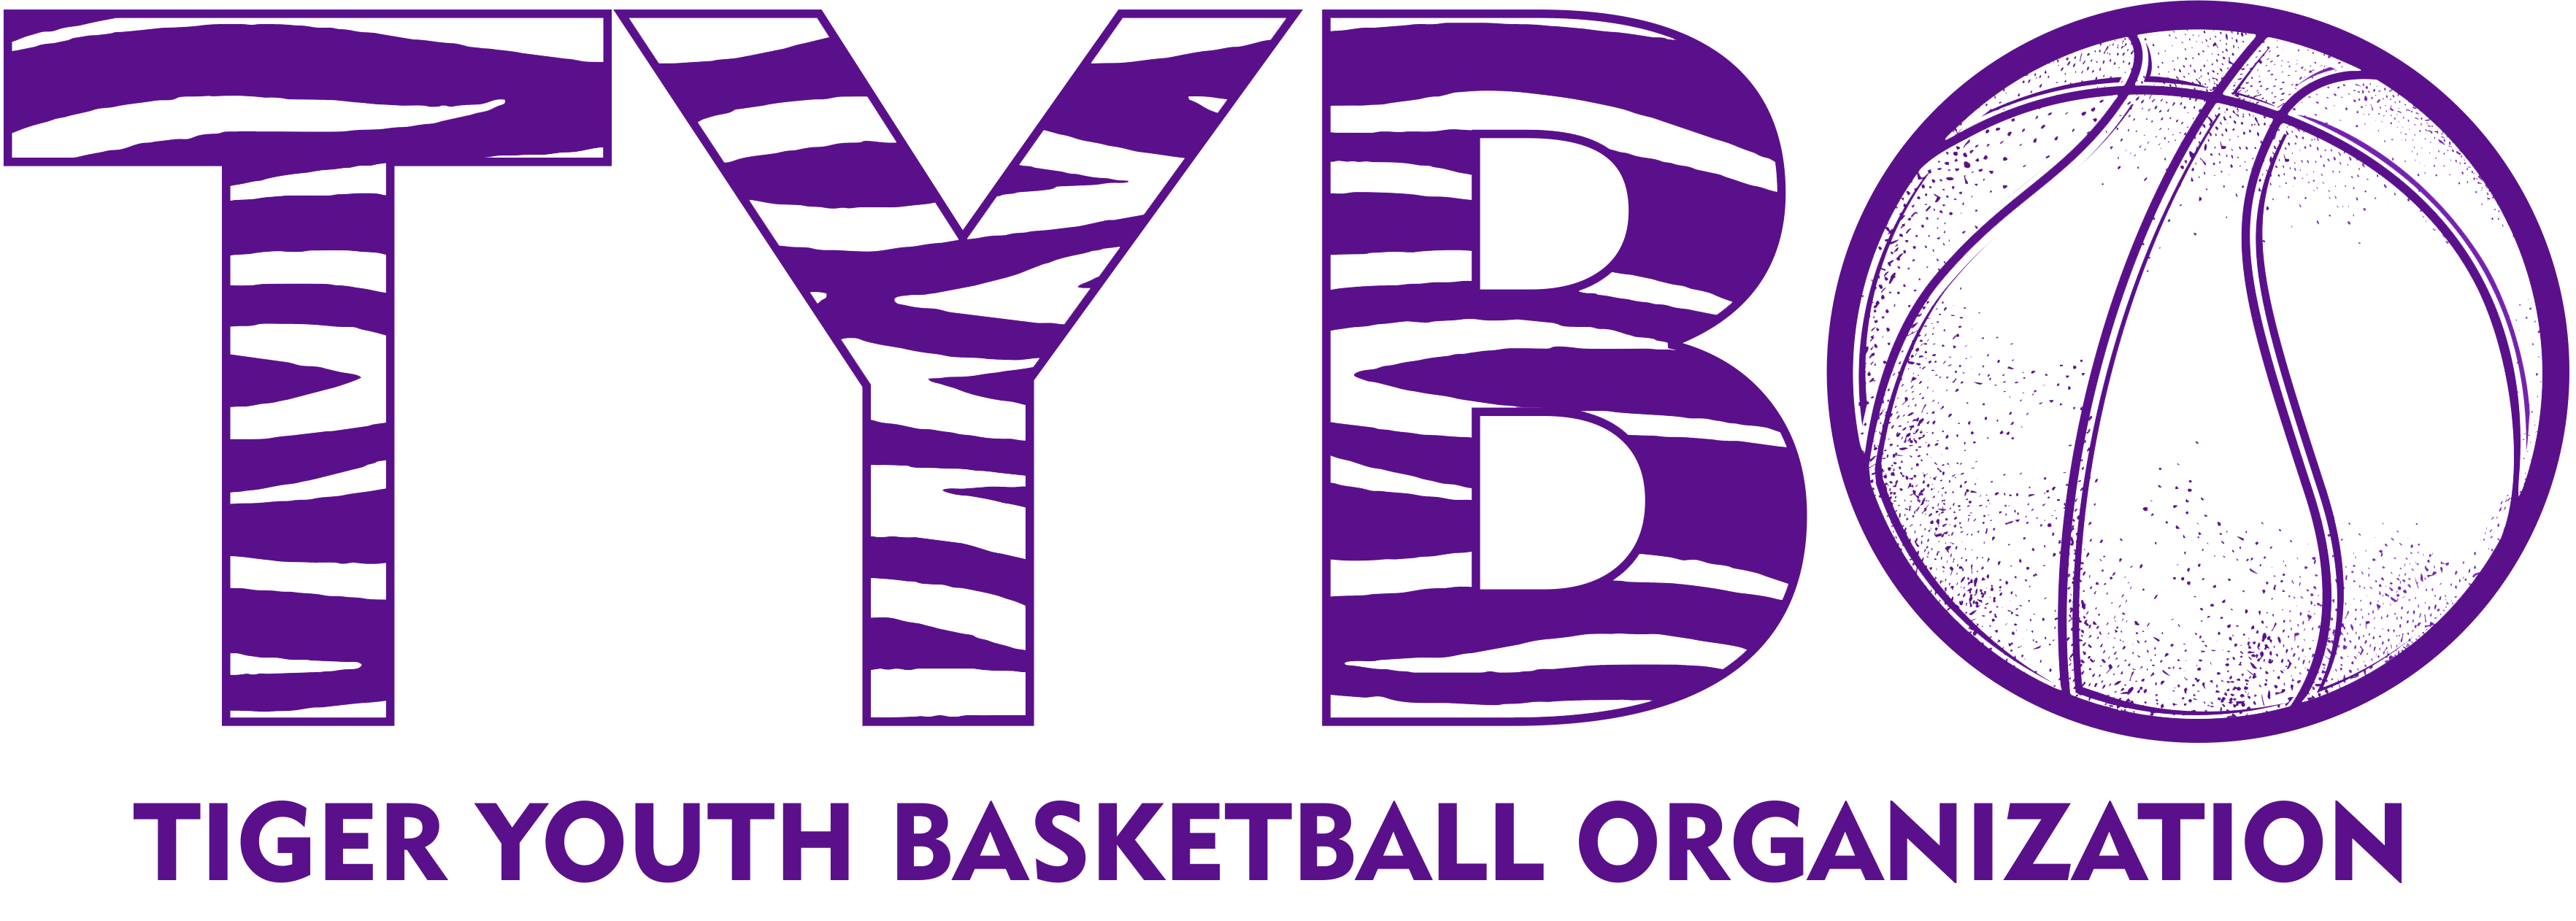 Tiger Youth Basketball Organization